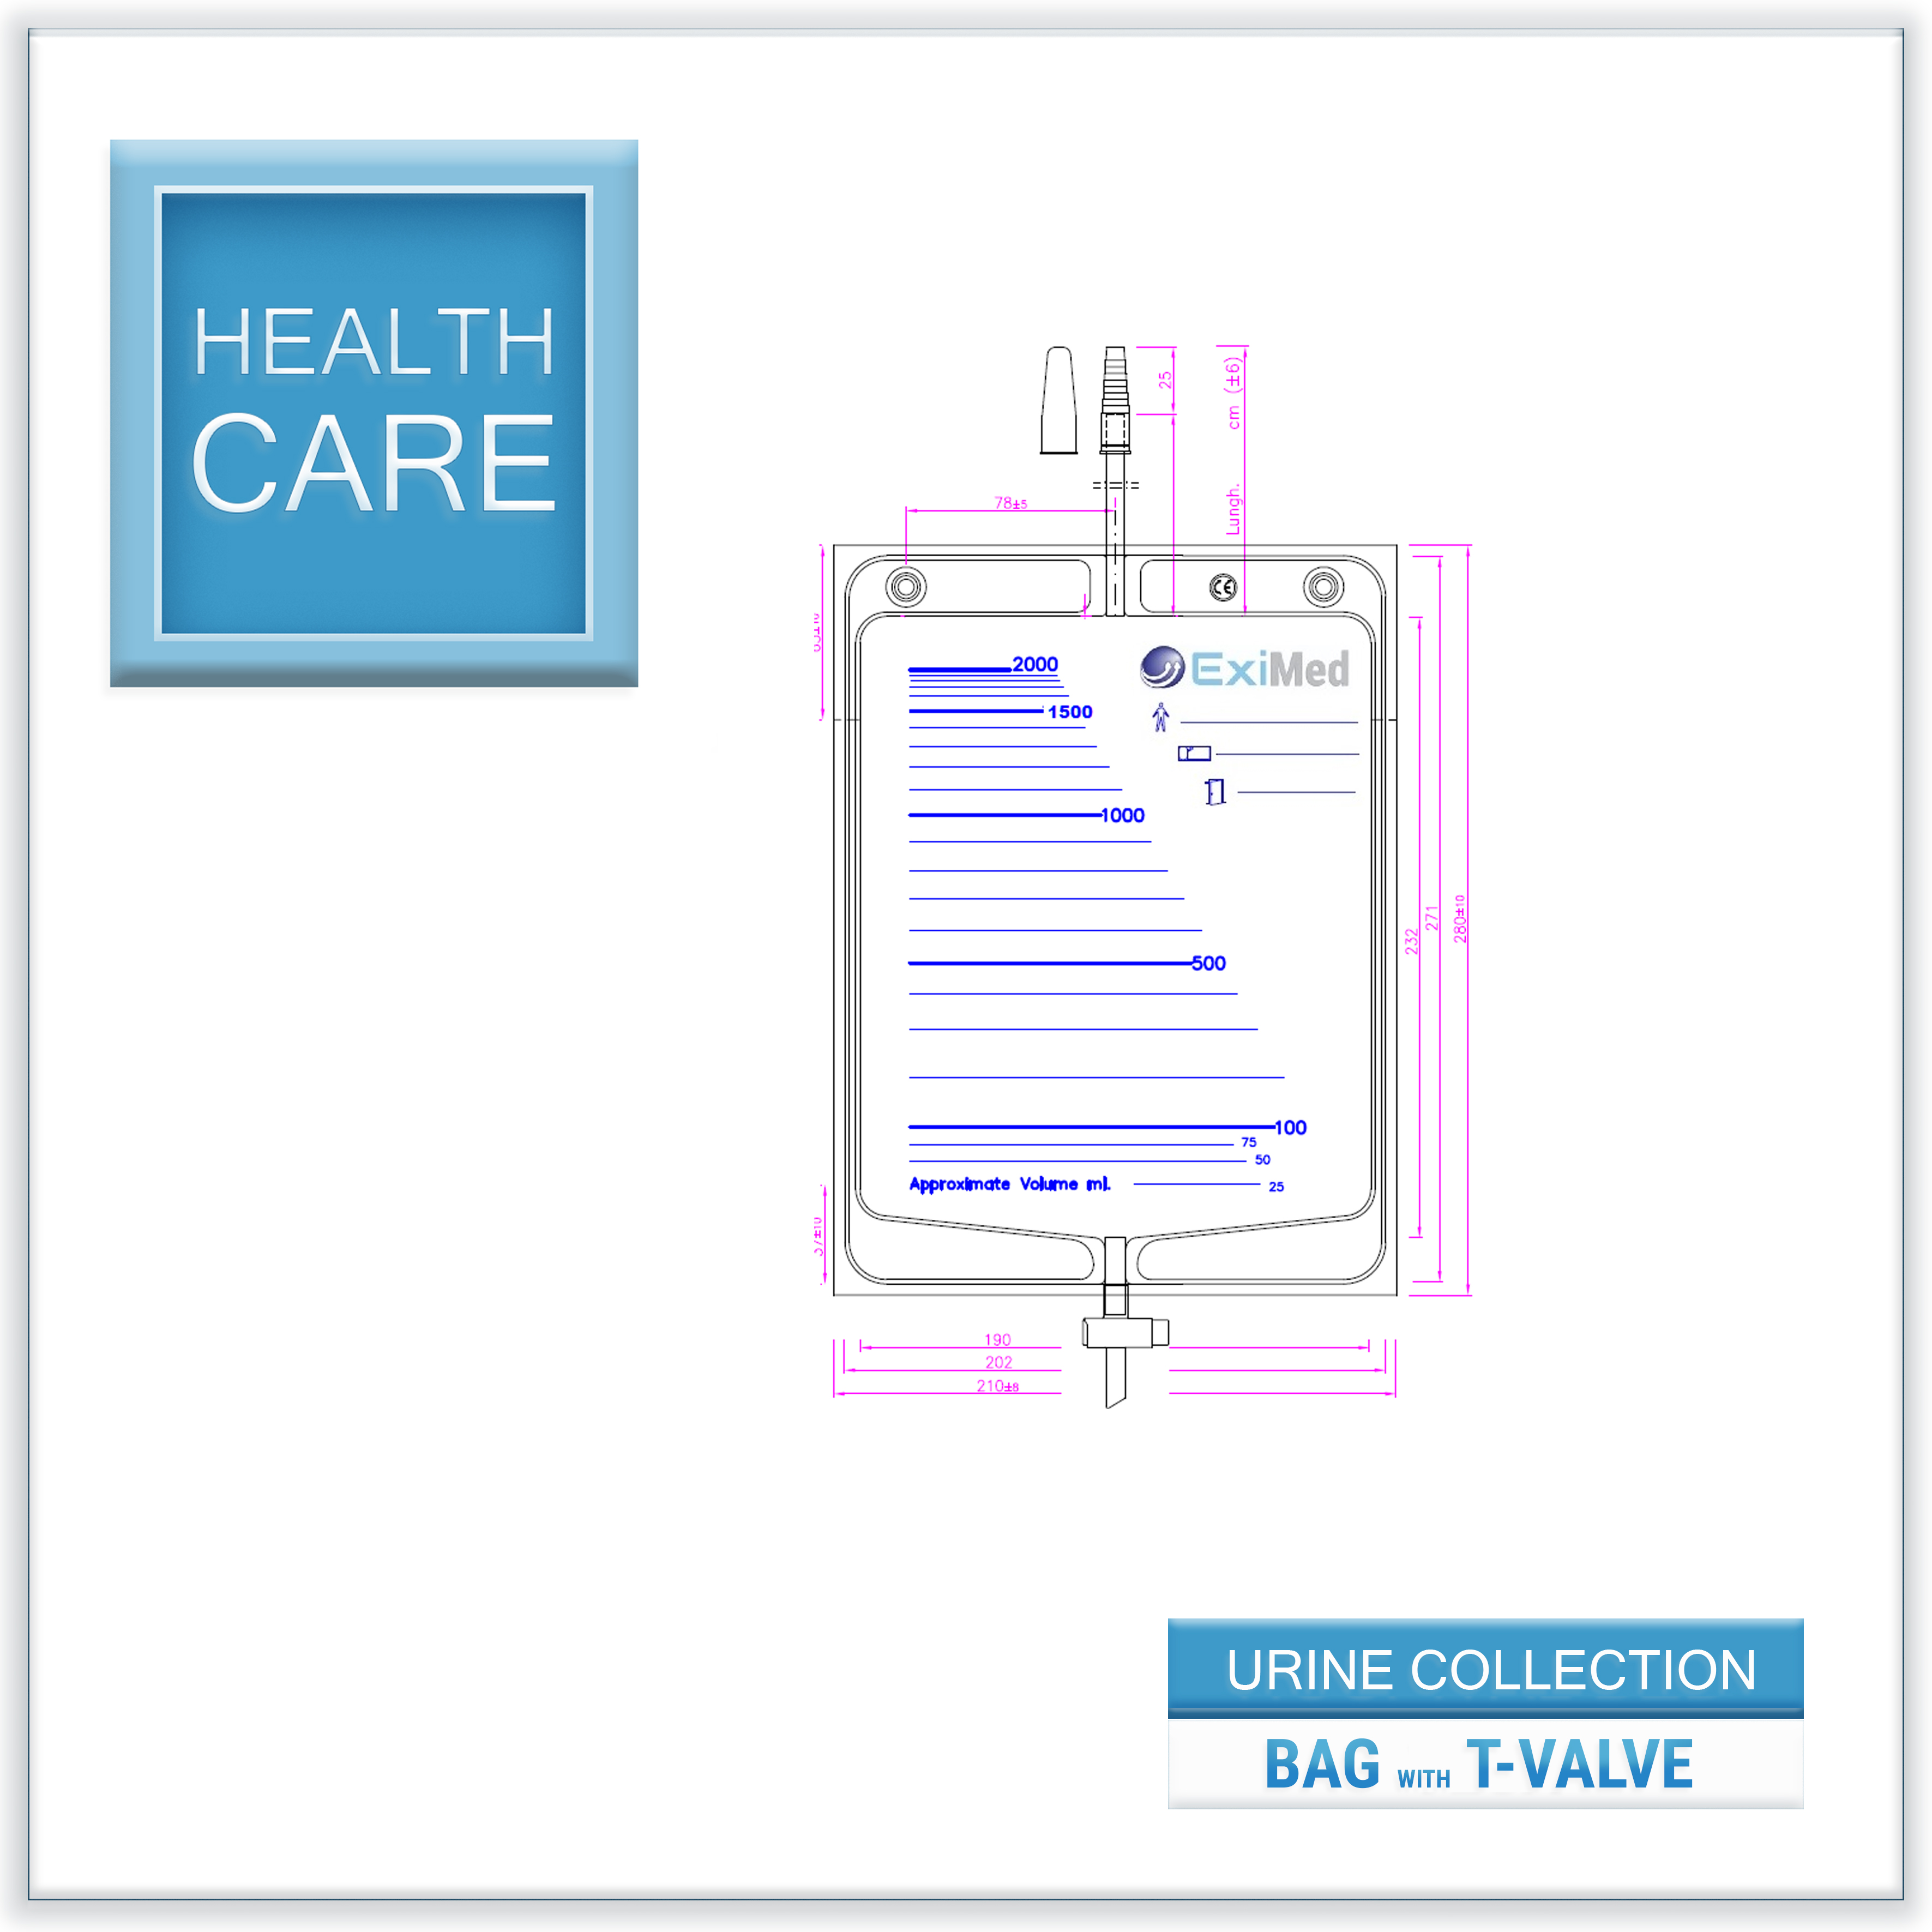 Urine collection bag (T-Valve outlet)